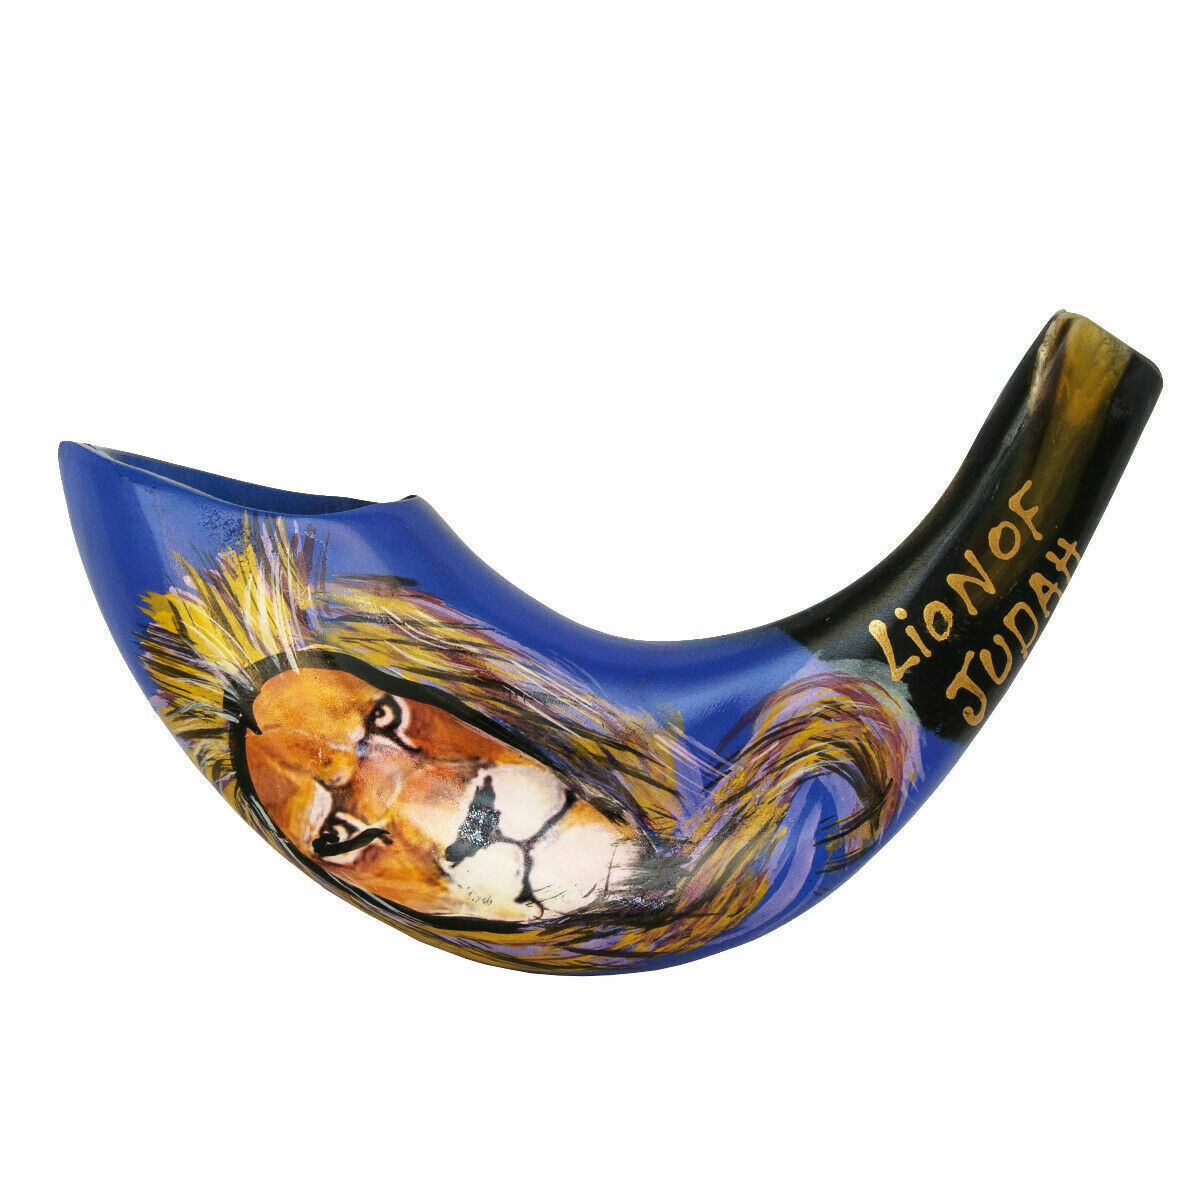 Israel Ram Horn Kosher Shofar 12-14 Inch With Lion Of Judah Hand Painting Art